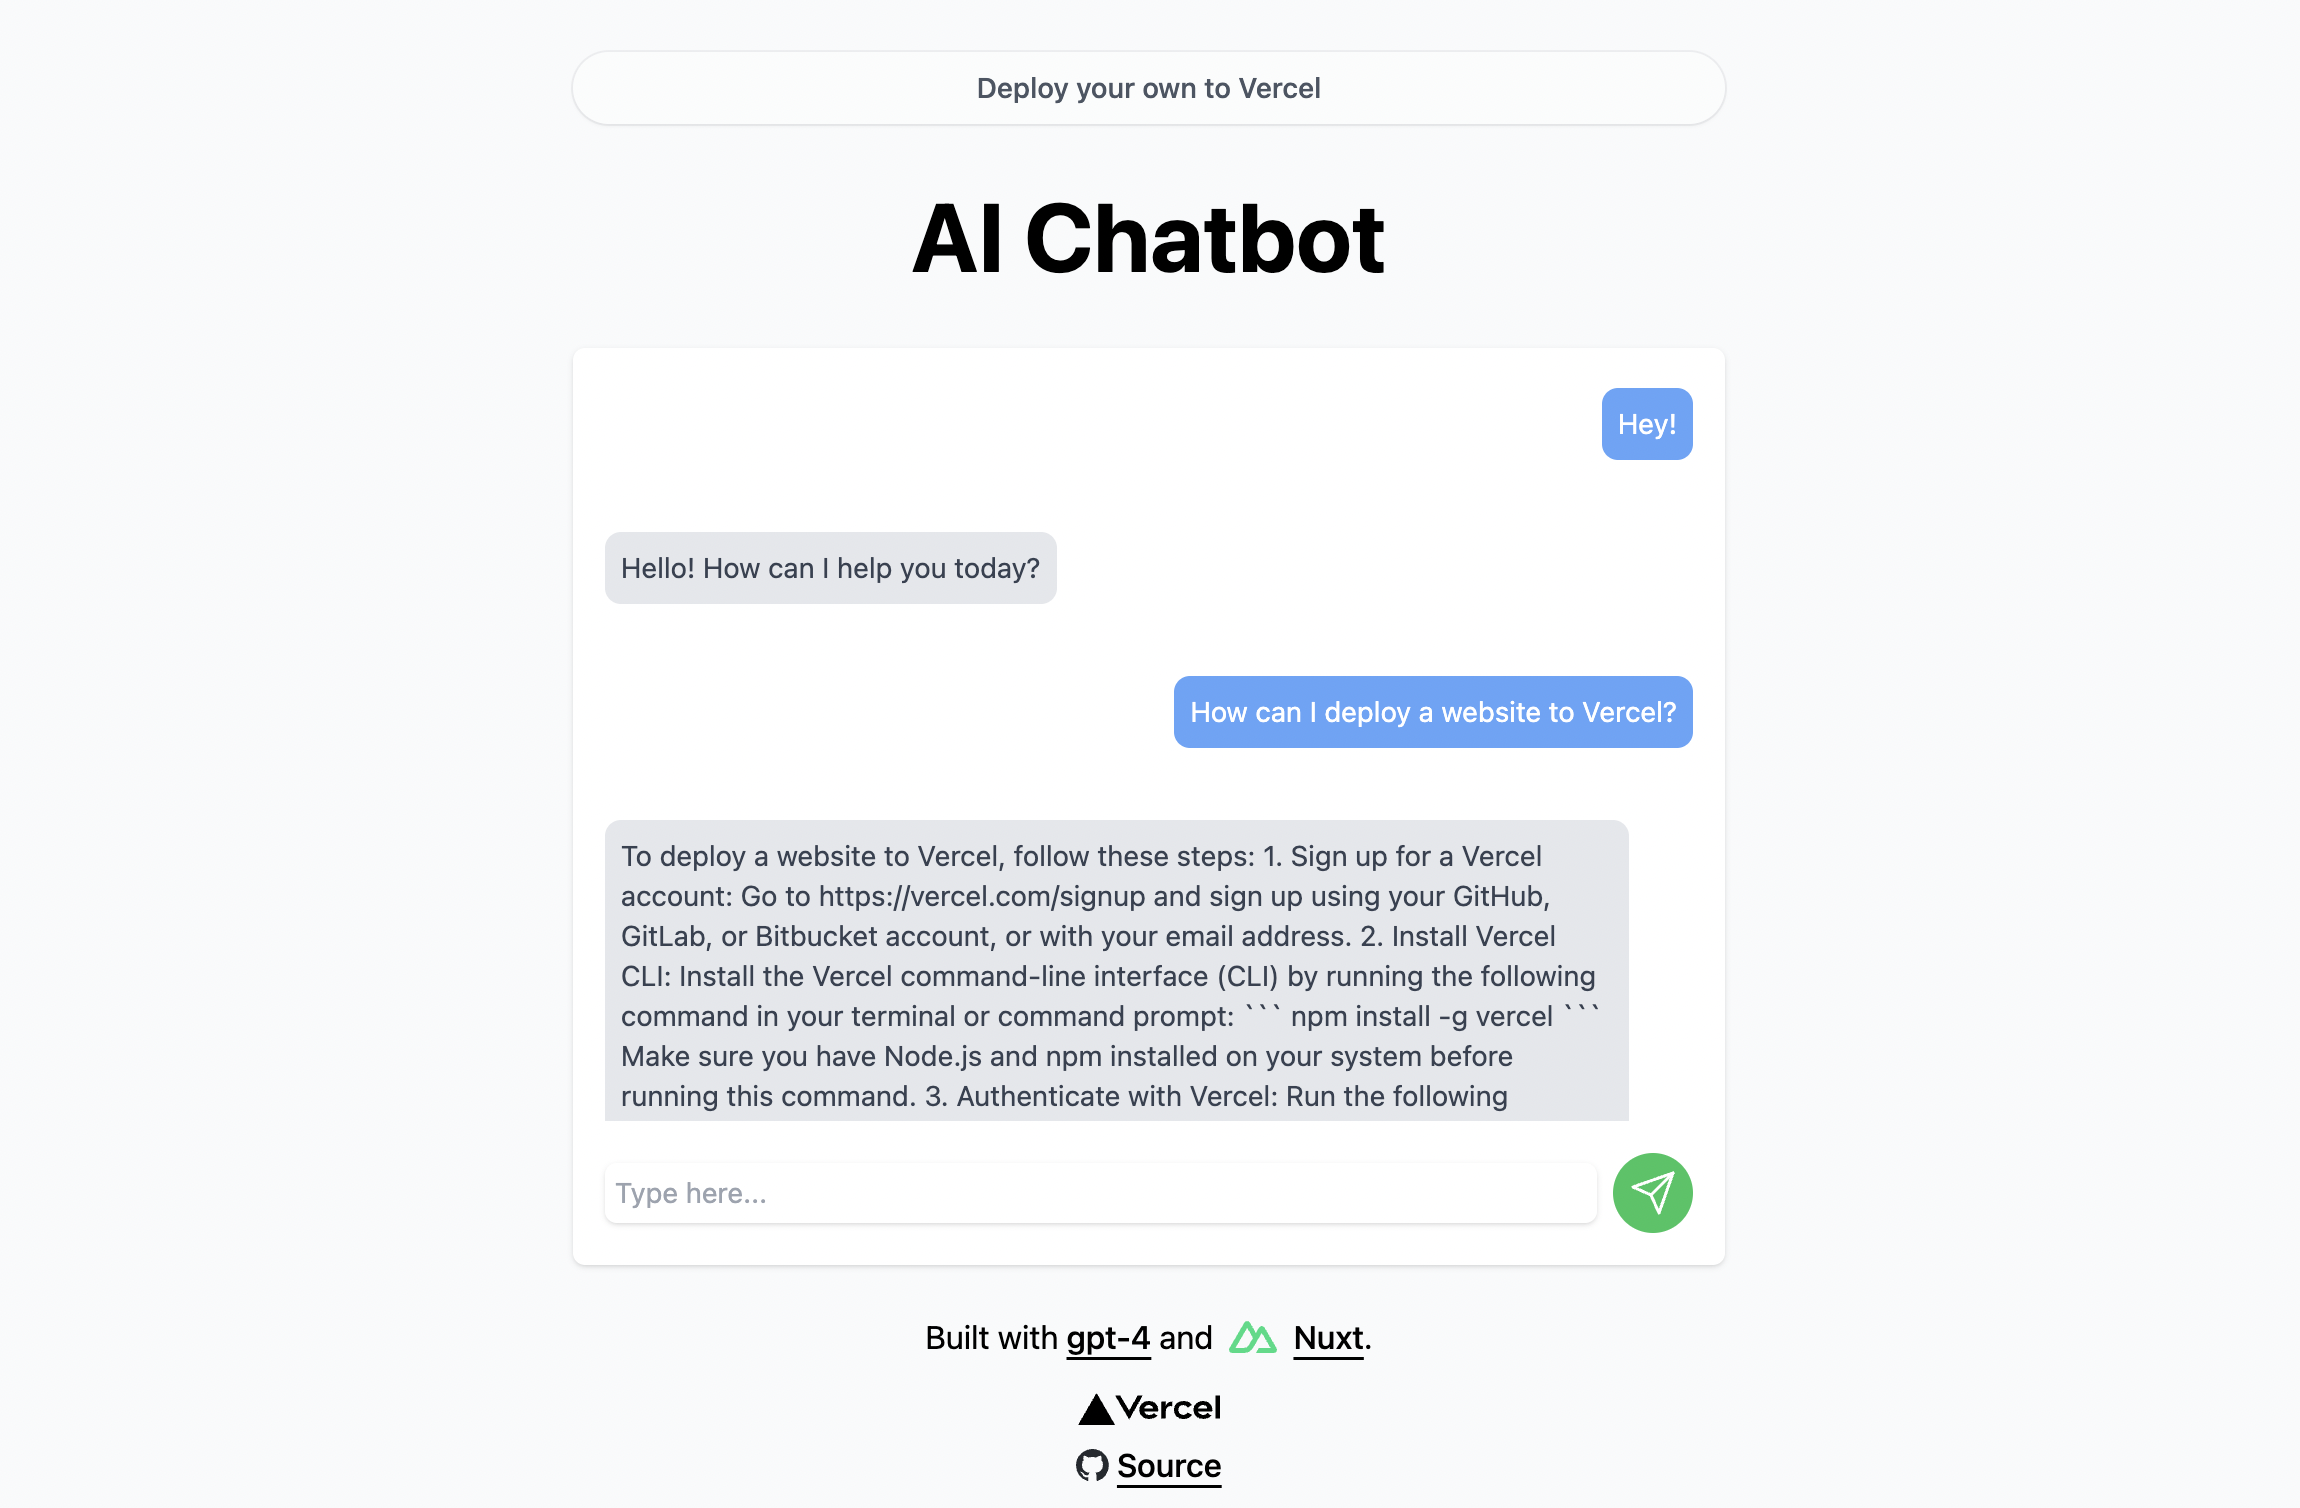 AI Chatbot image